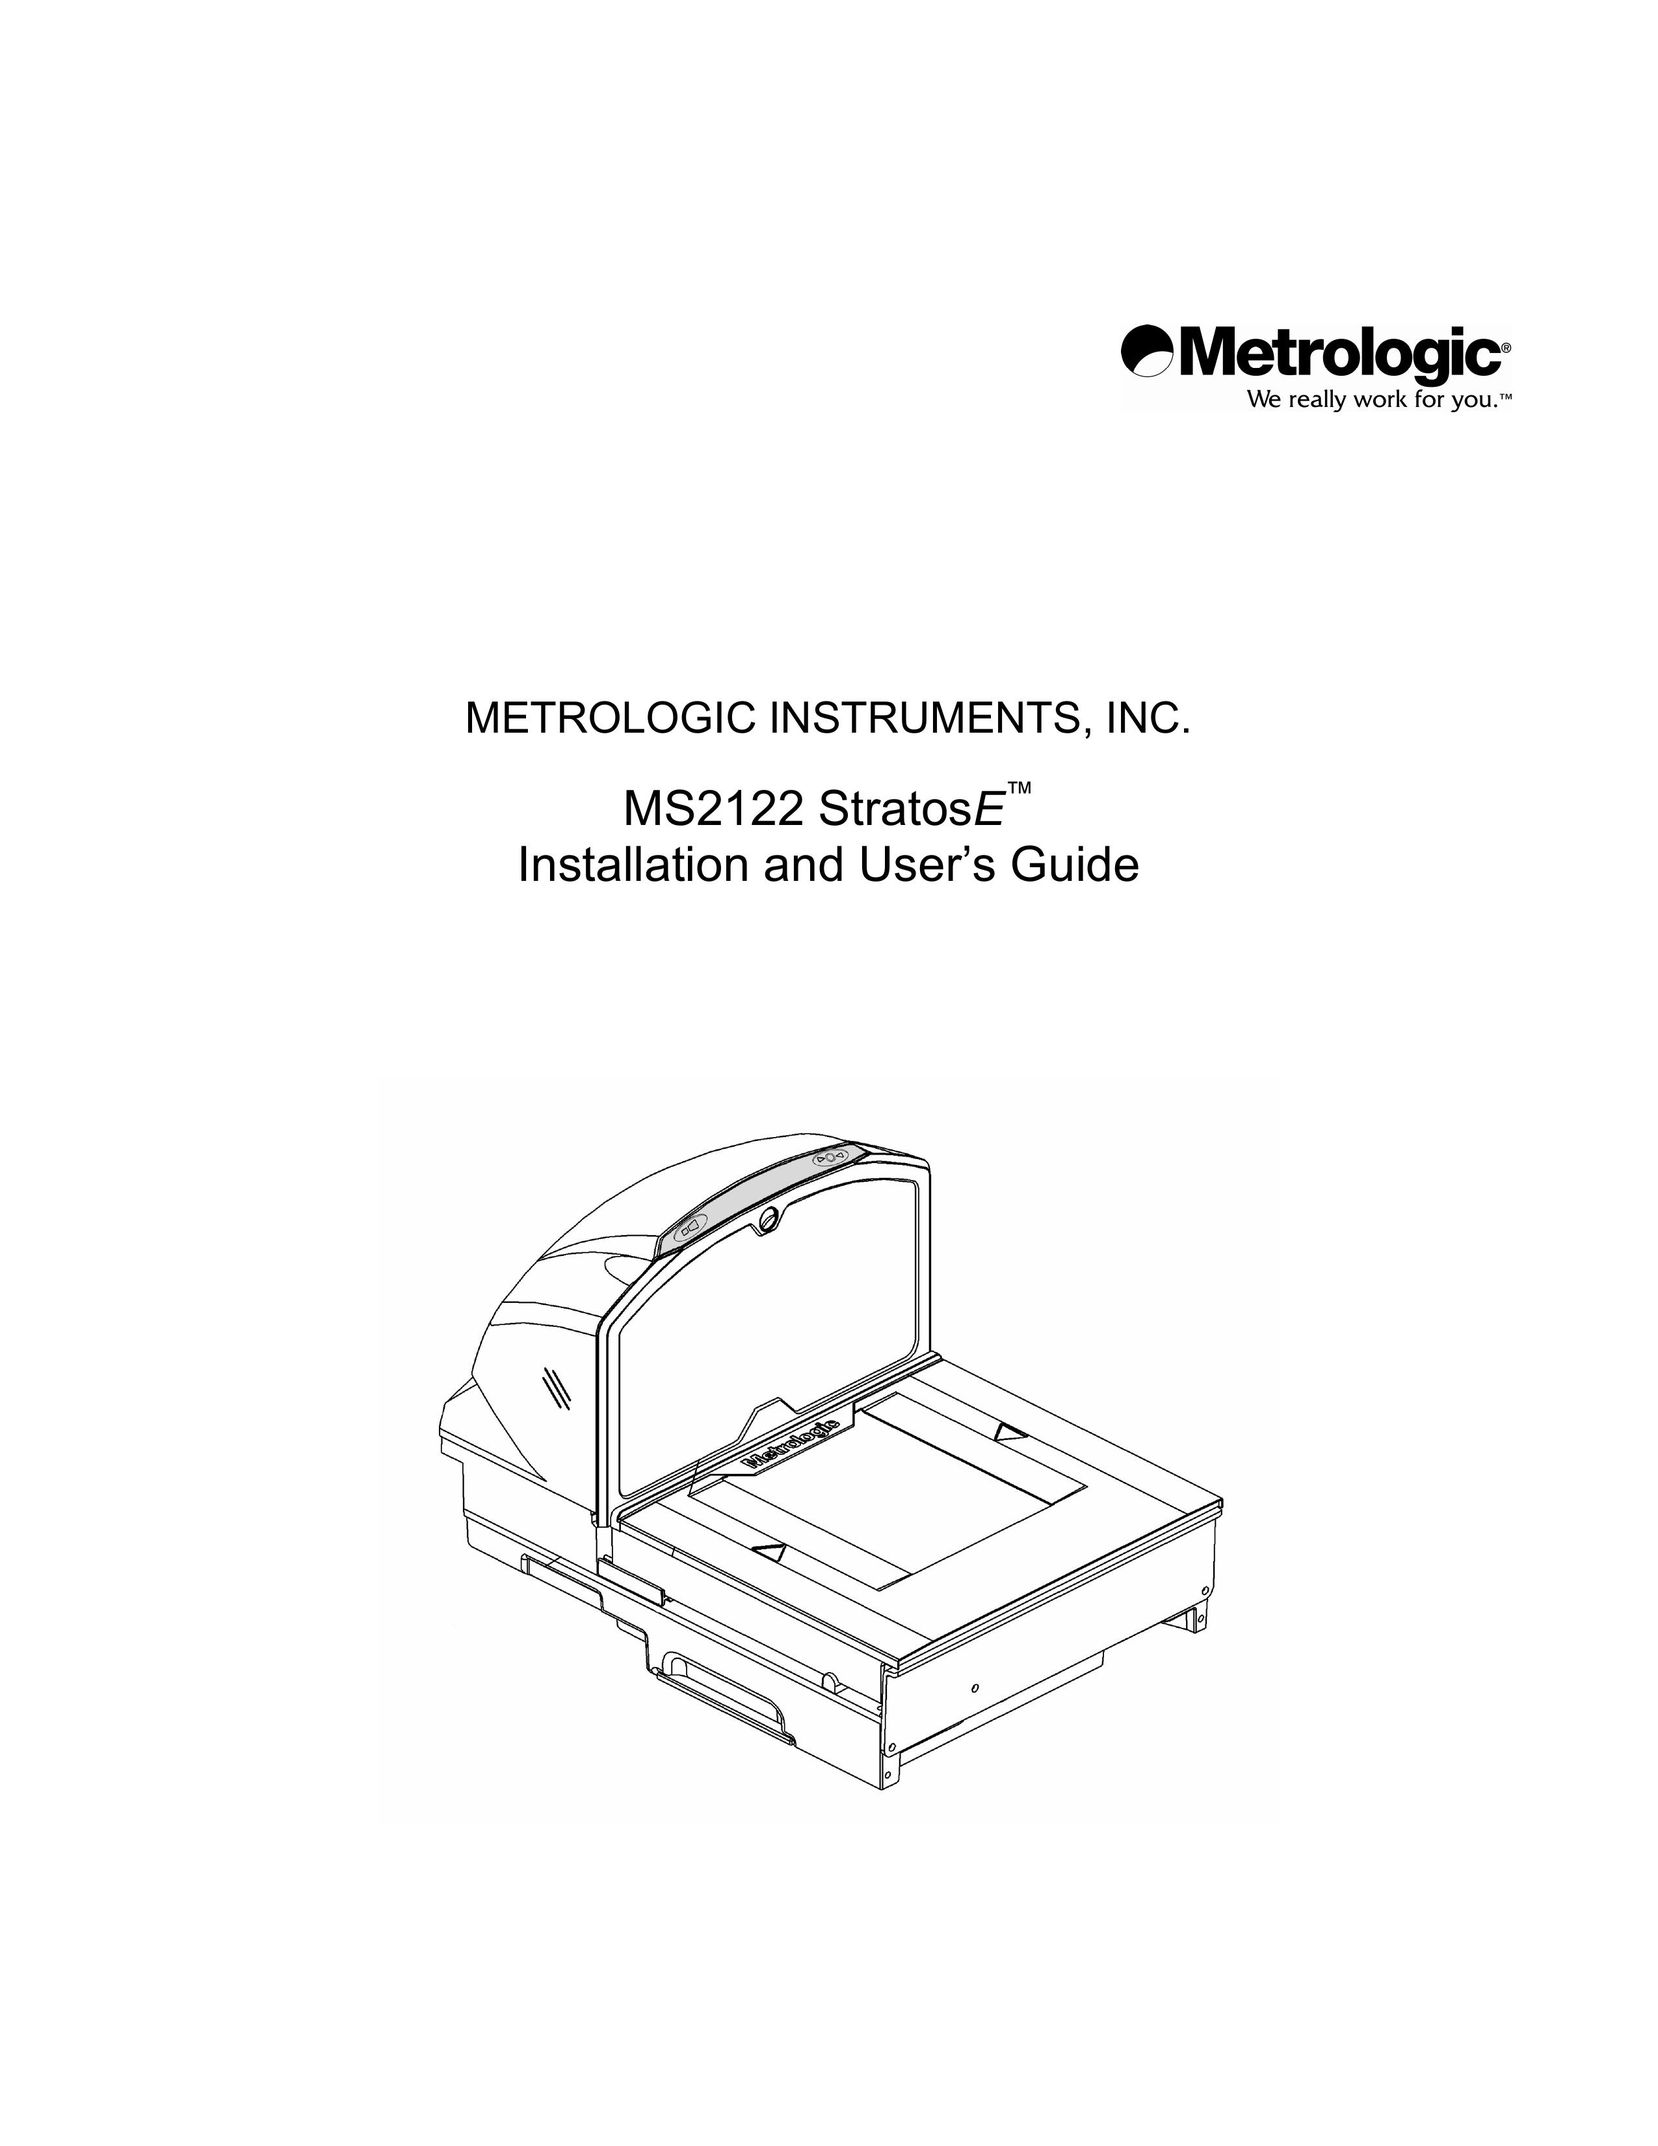 Metrologic Instruments MS2122 All in One Printer User Manual